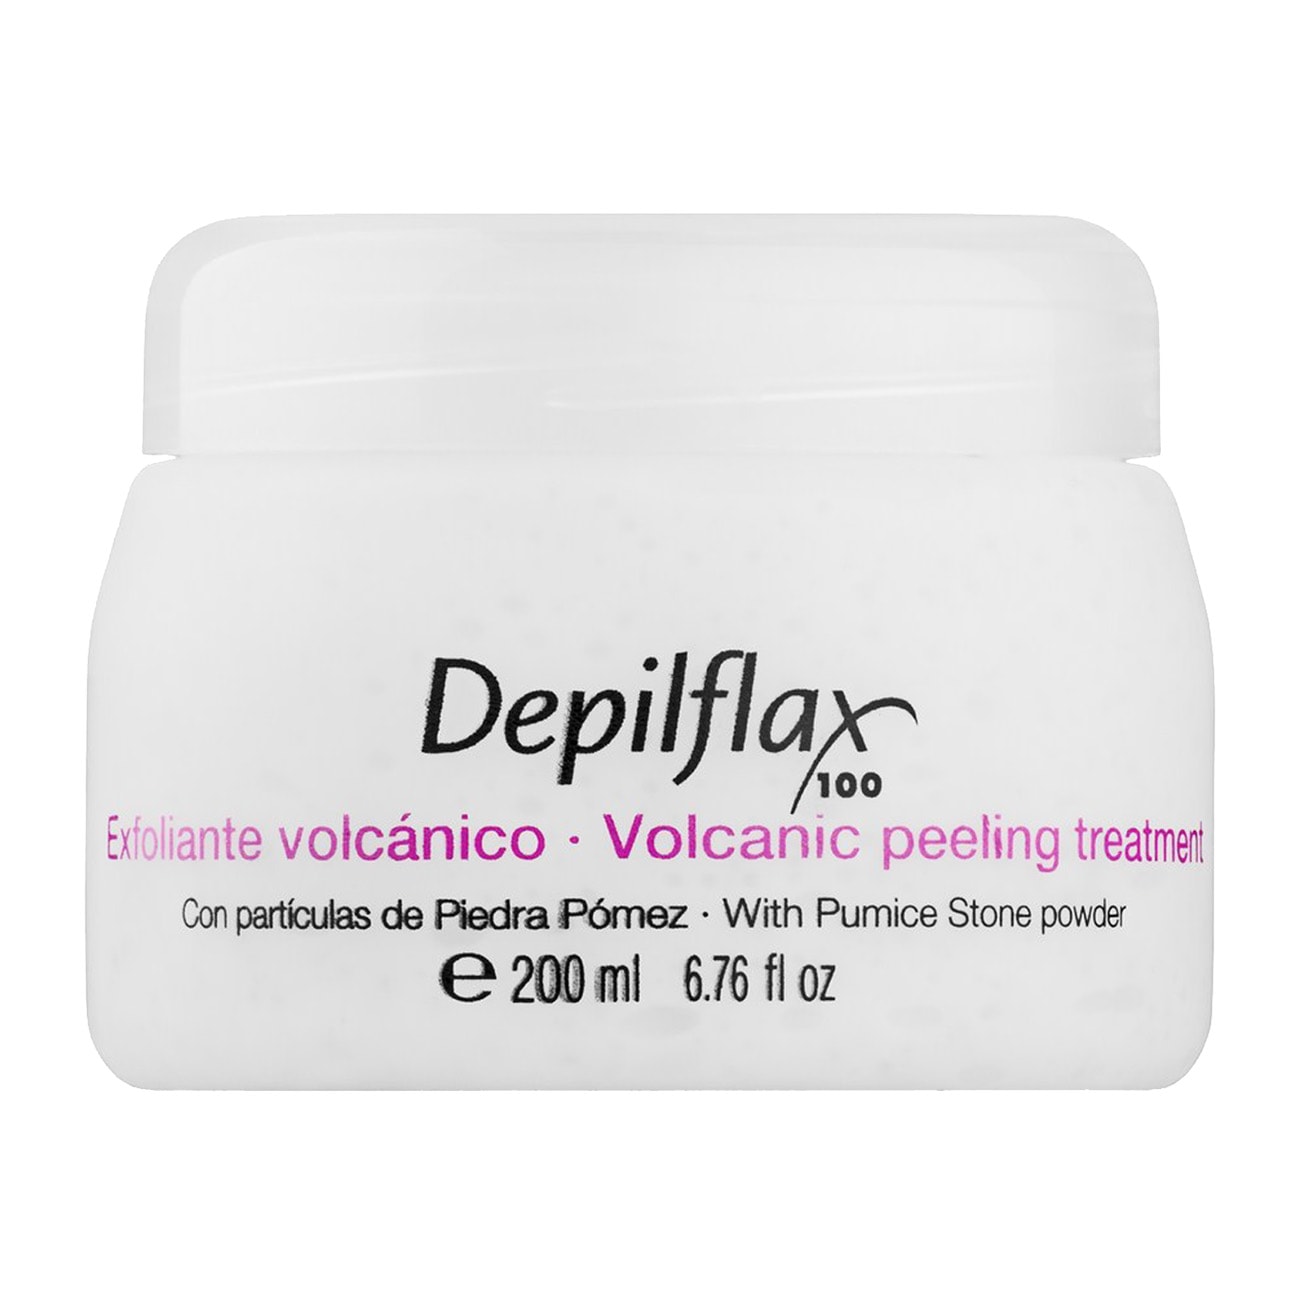 Depilflax volcanic peeling parafin